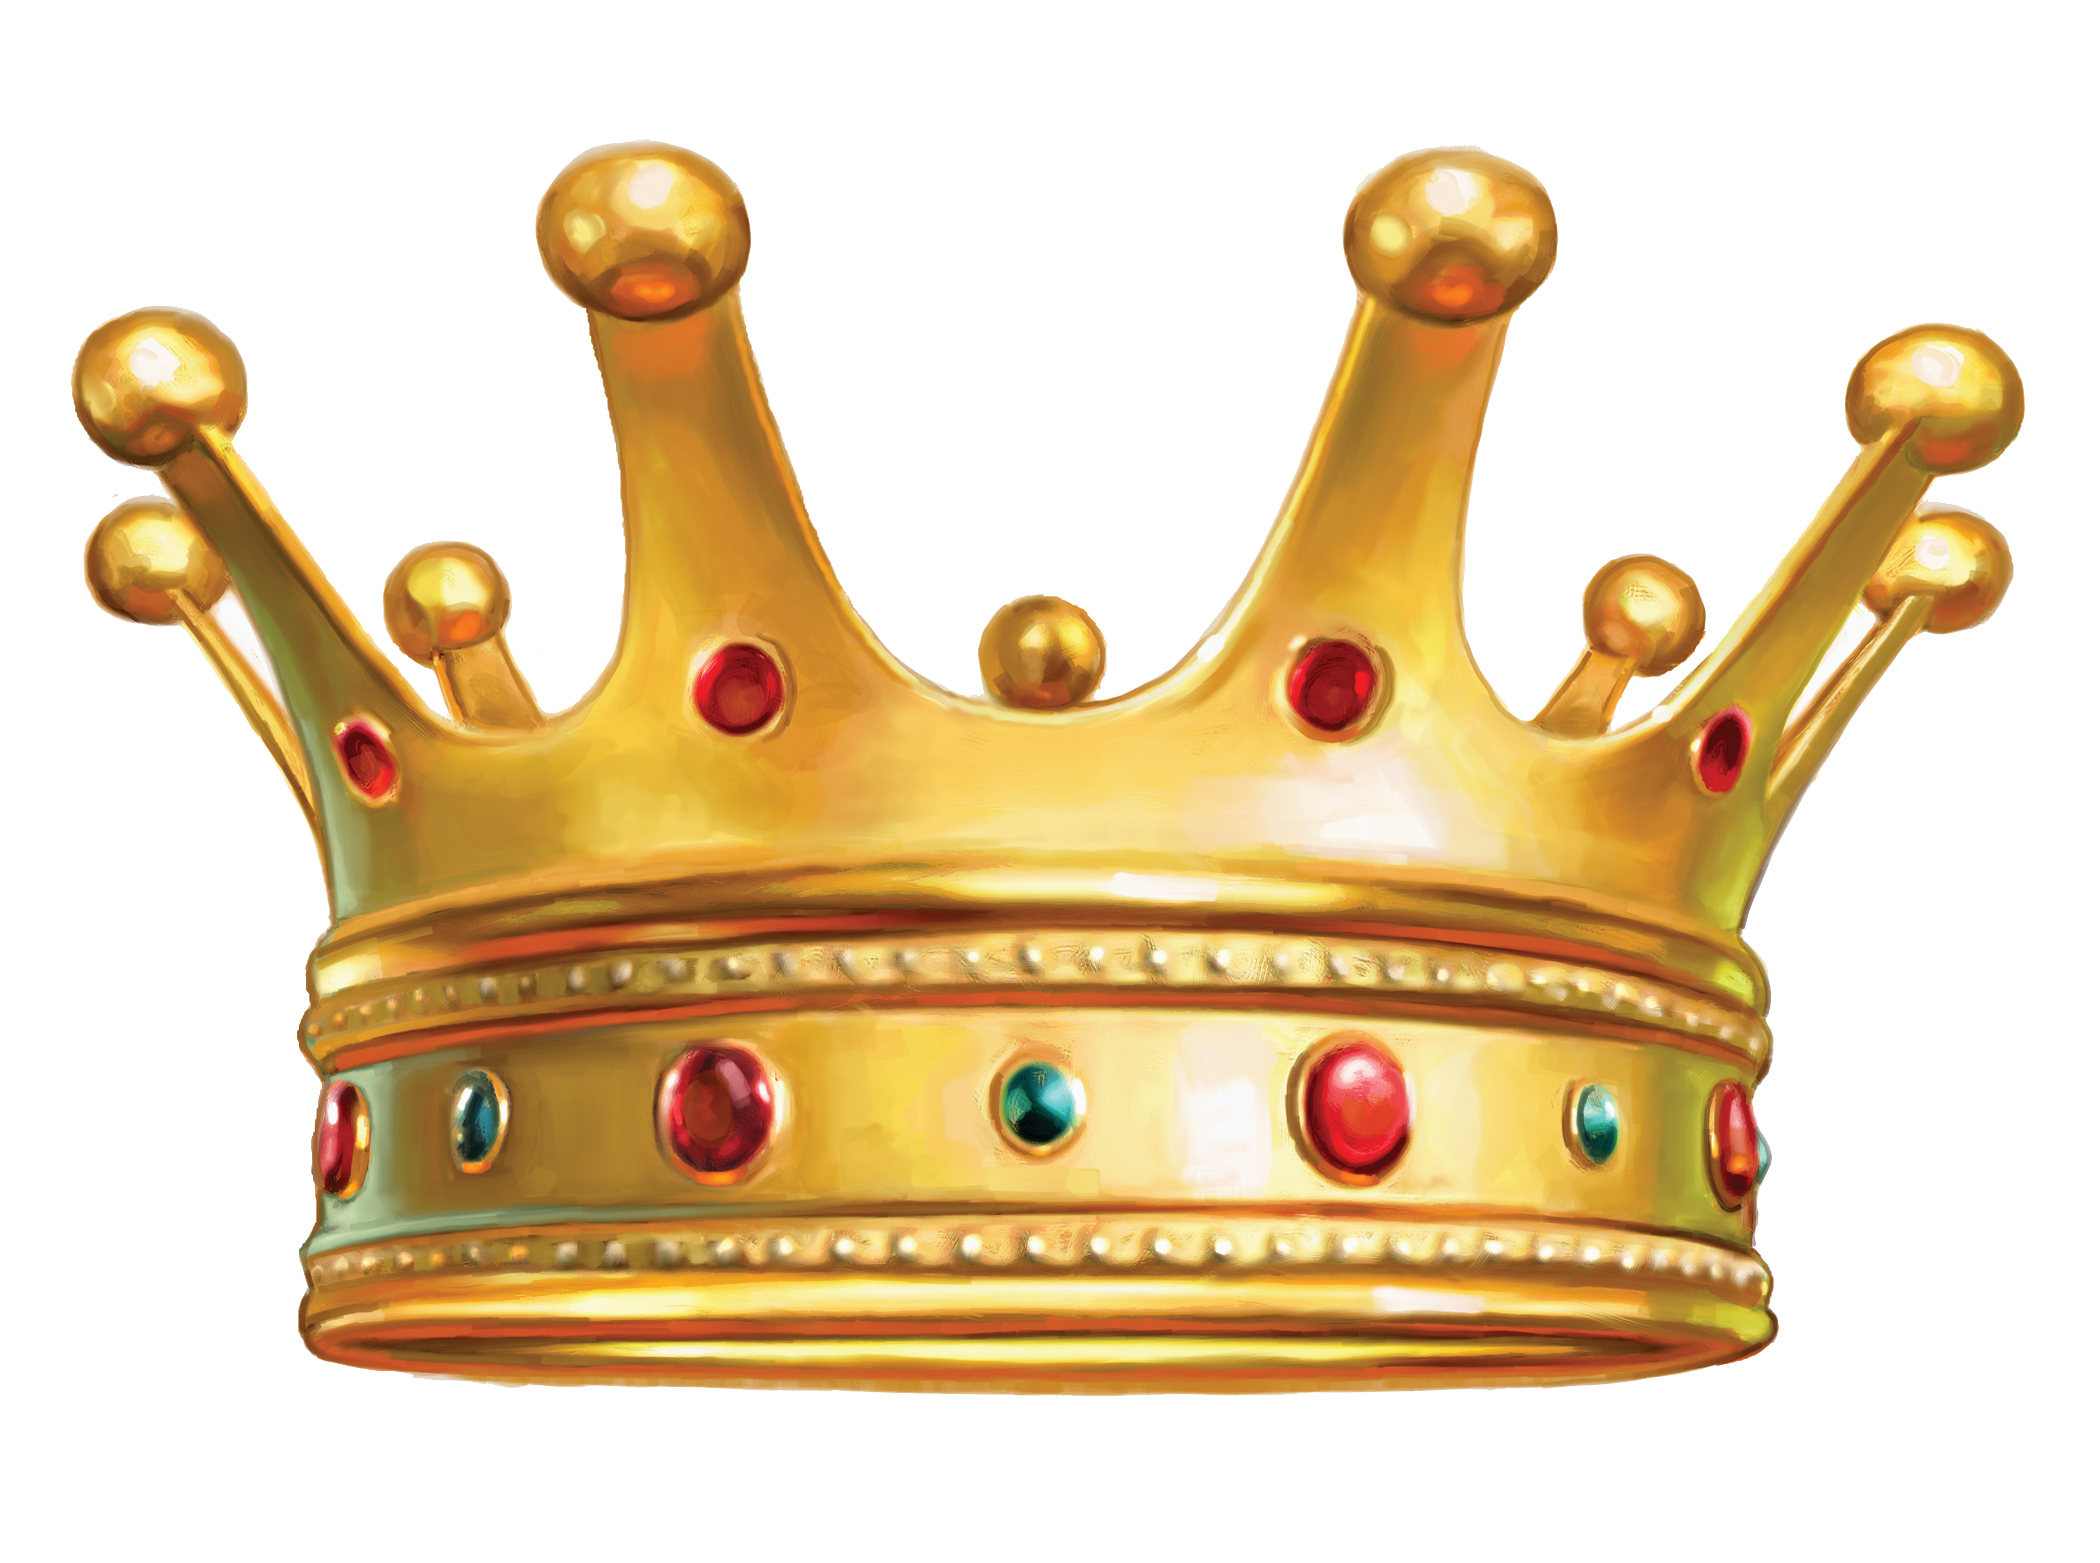 crowns clipart big crown